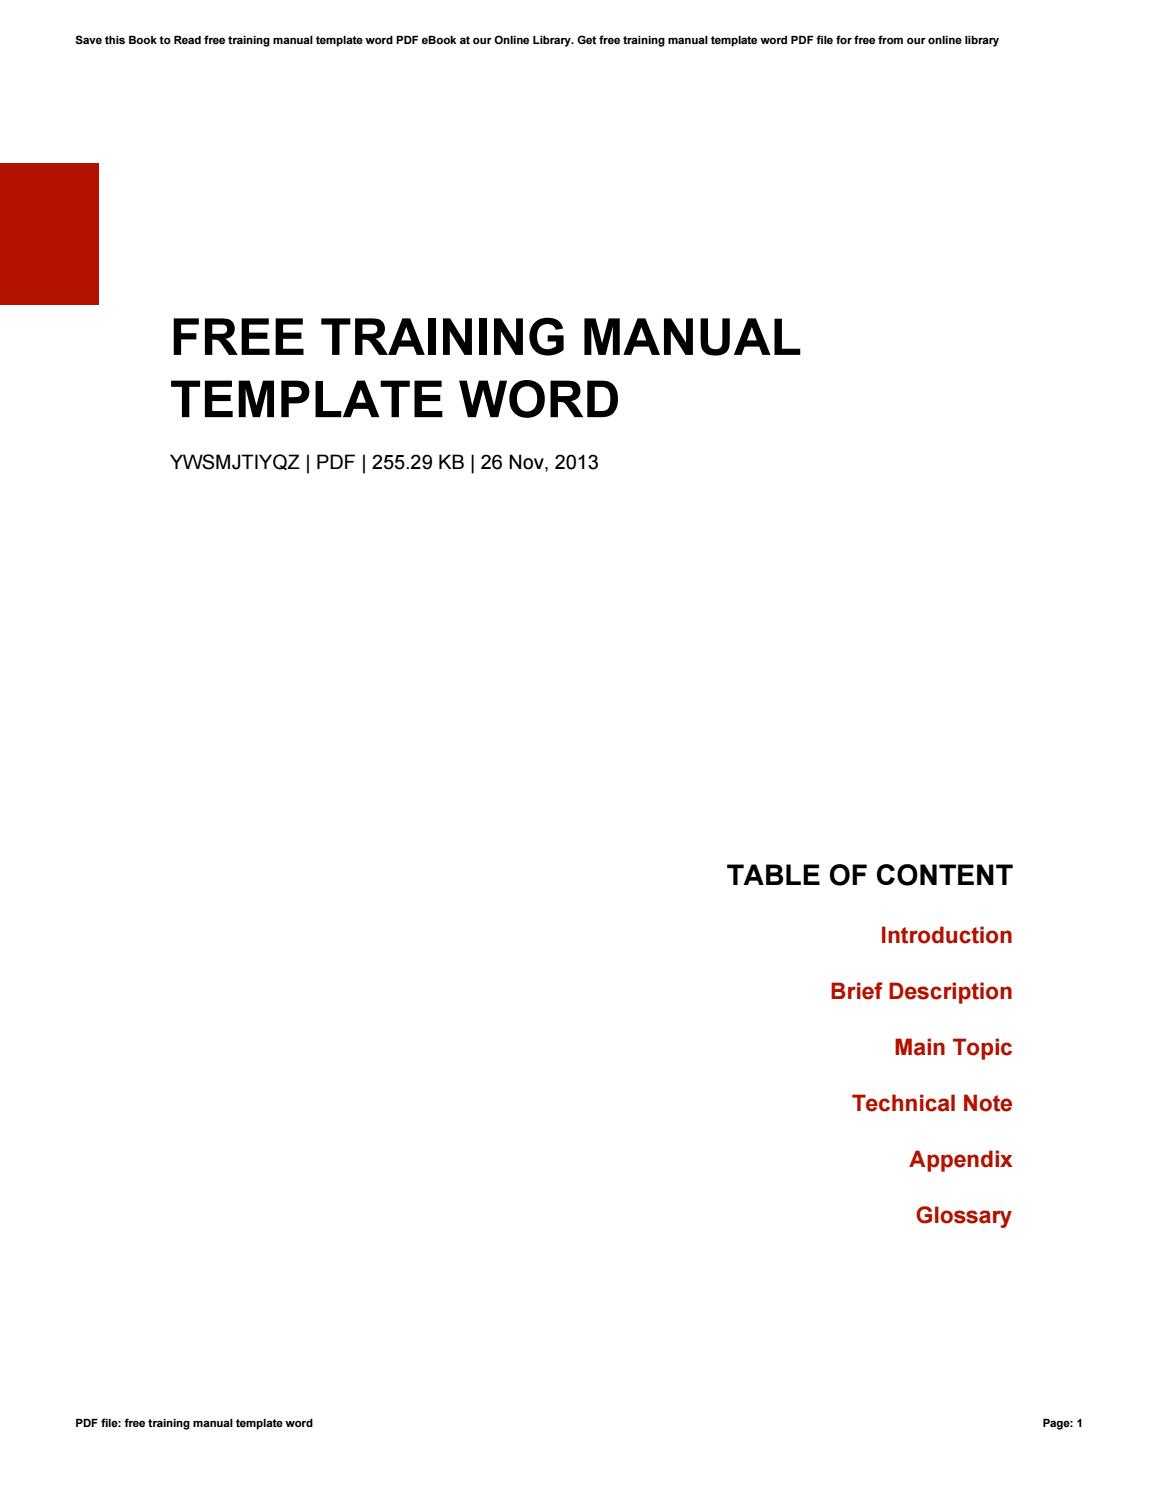 Free Training Manual Template Wordkazelink257 – Issuu Within Training Documentation Template Word